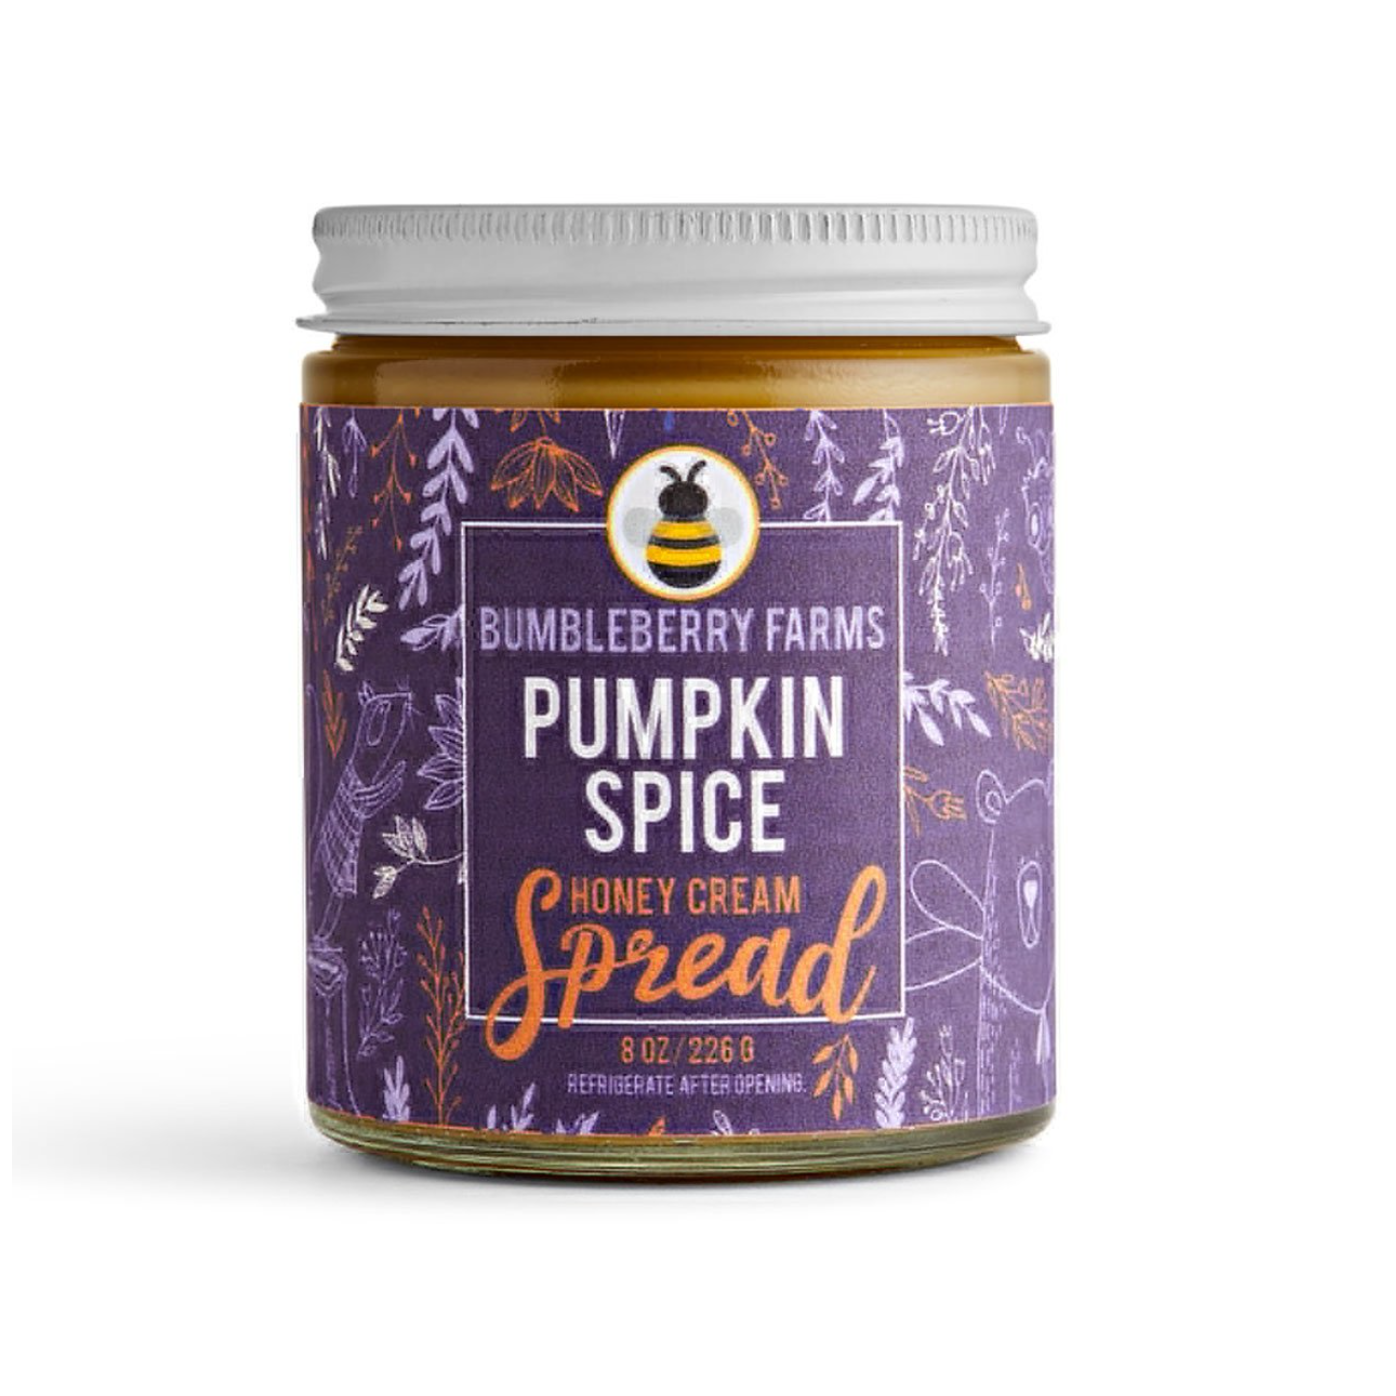 Pumpkin Spice Spread - Bumbleberry Farms